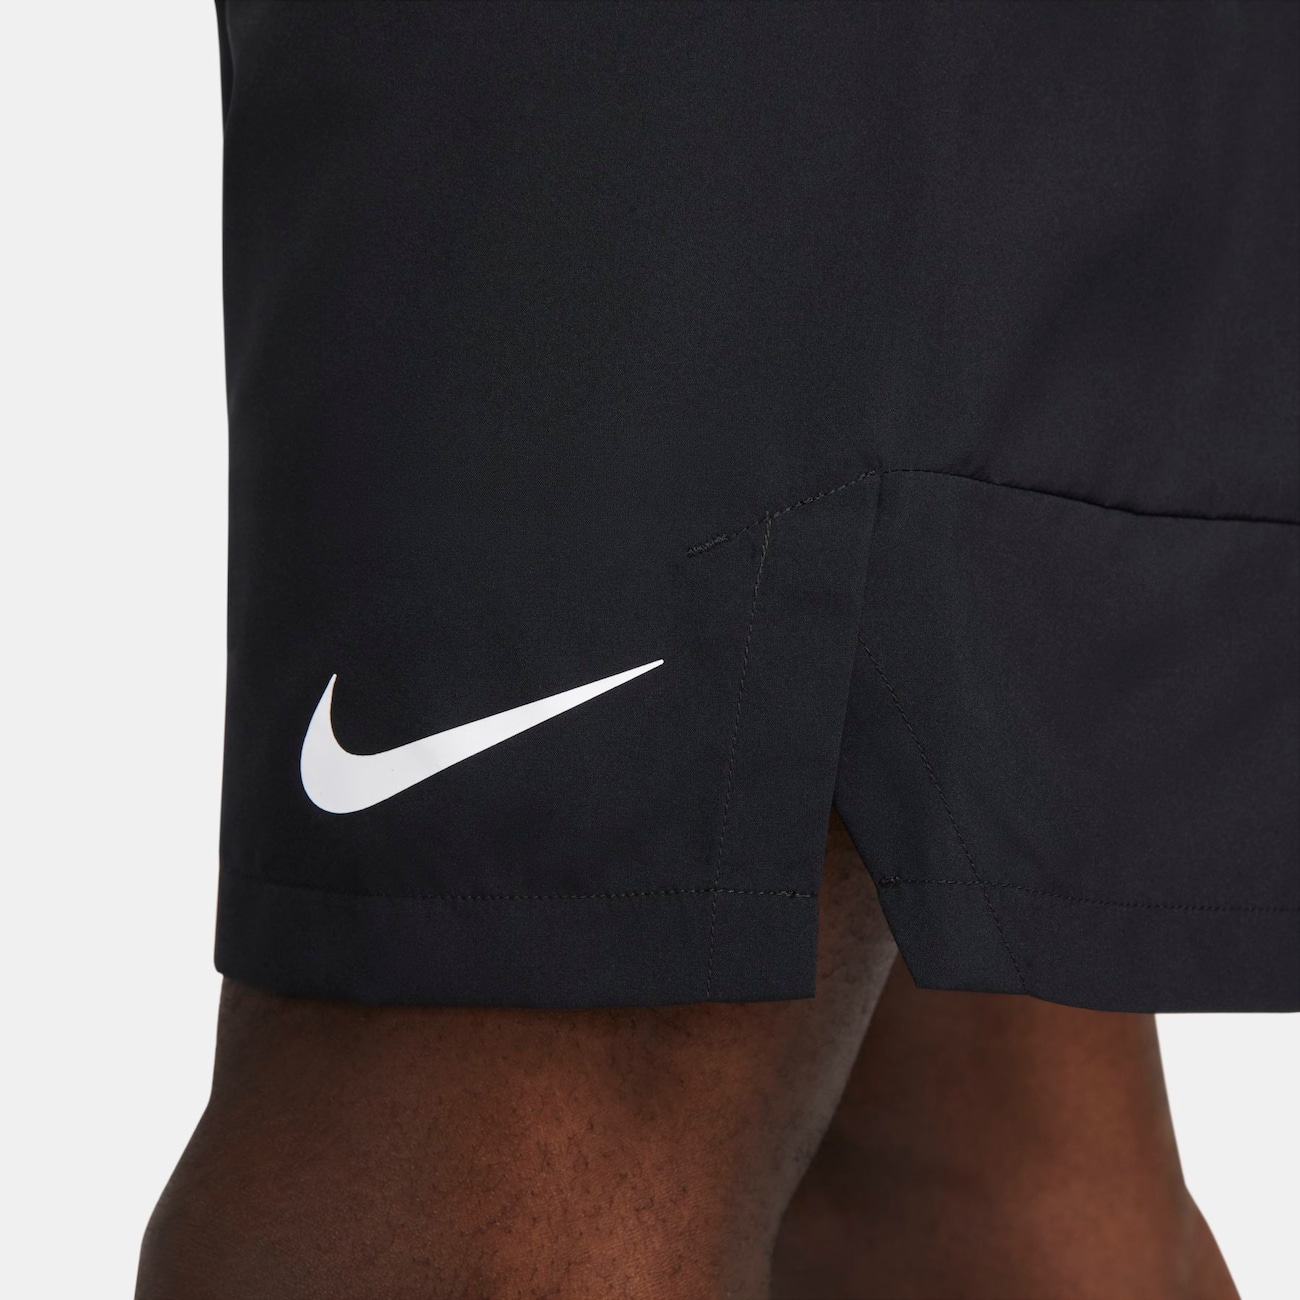 Bermuda Nike Flex Woven 3.0 Masculino - Marinho Multicores